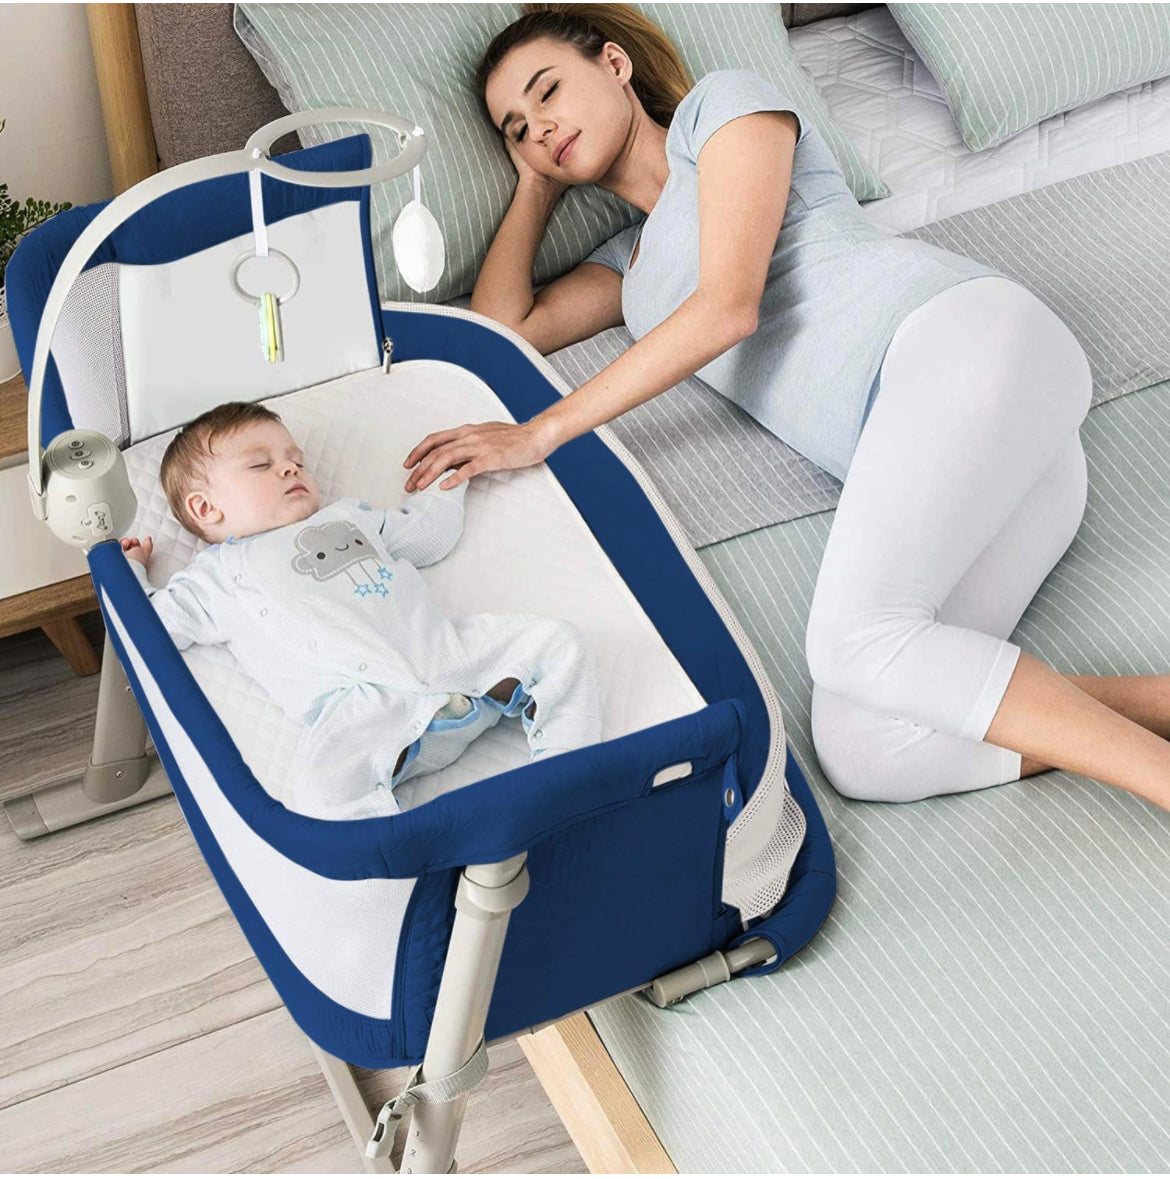 Cradella Baby Bedside Bassinet for Co-sleeping. Multi level height adjustments 0-24M (Grey)